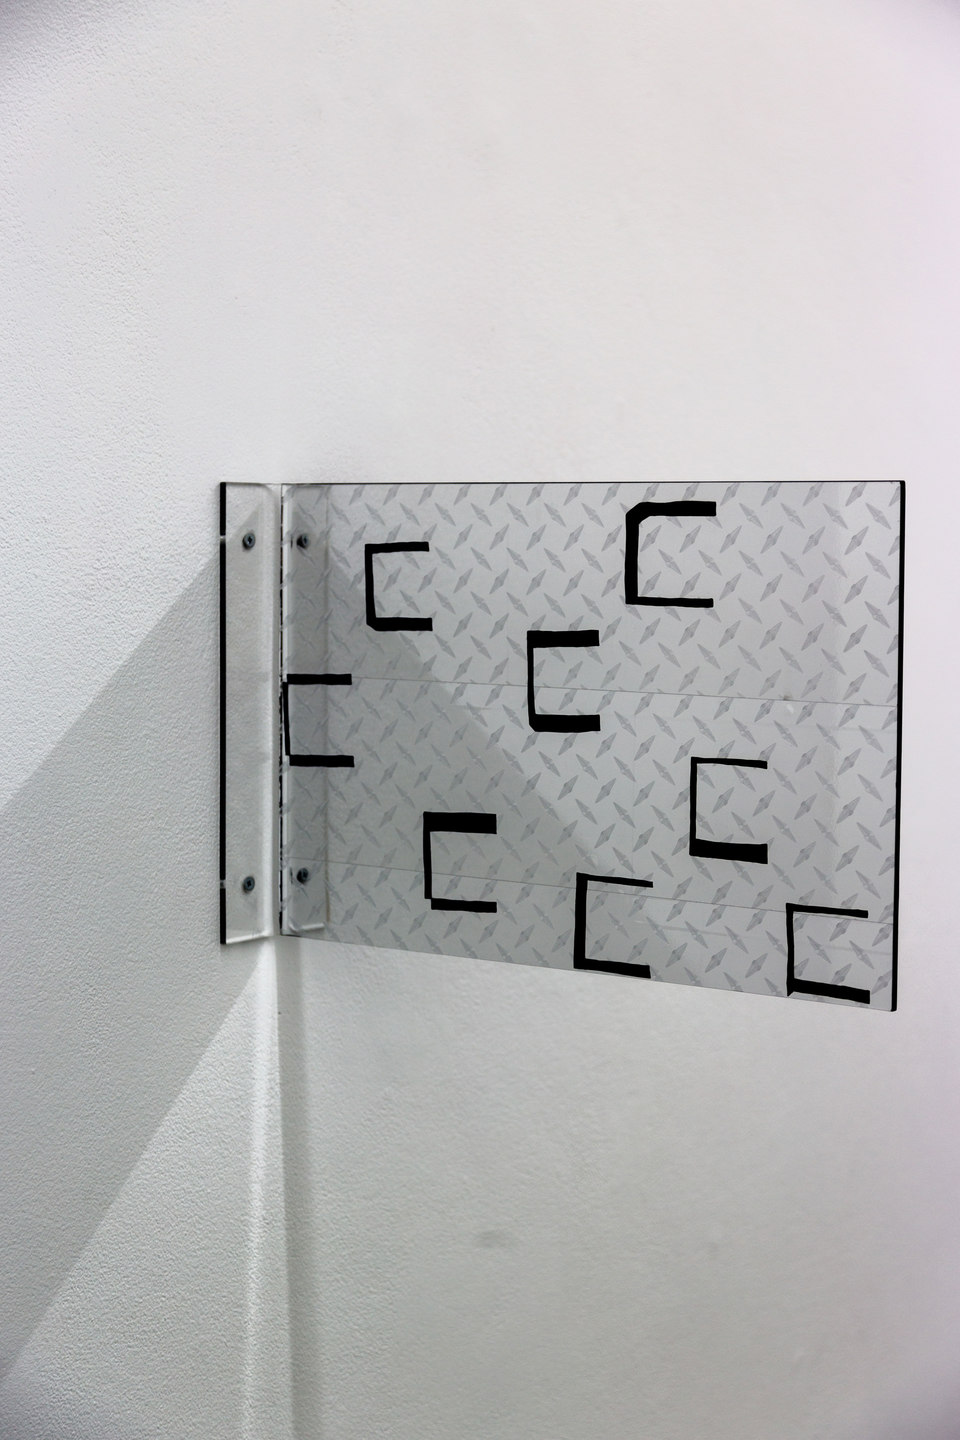 Marte Eknæs, Reboot Horizon, 'Alternative Solutions Diamond Plate', 2013, plexiglass, custom vinyl sticker, diamond plate decal, Cell Project Space